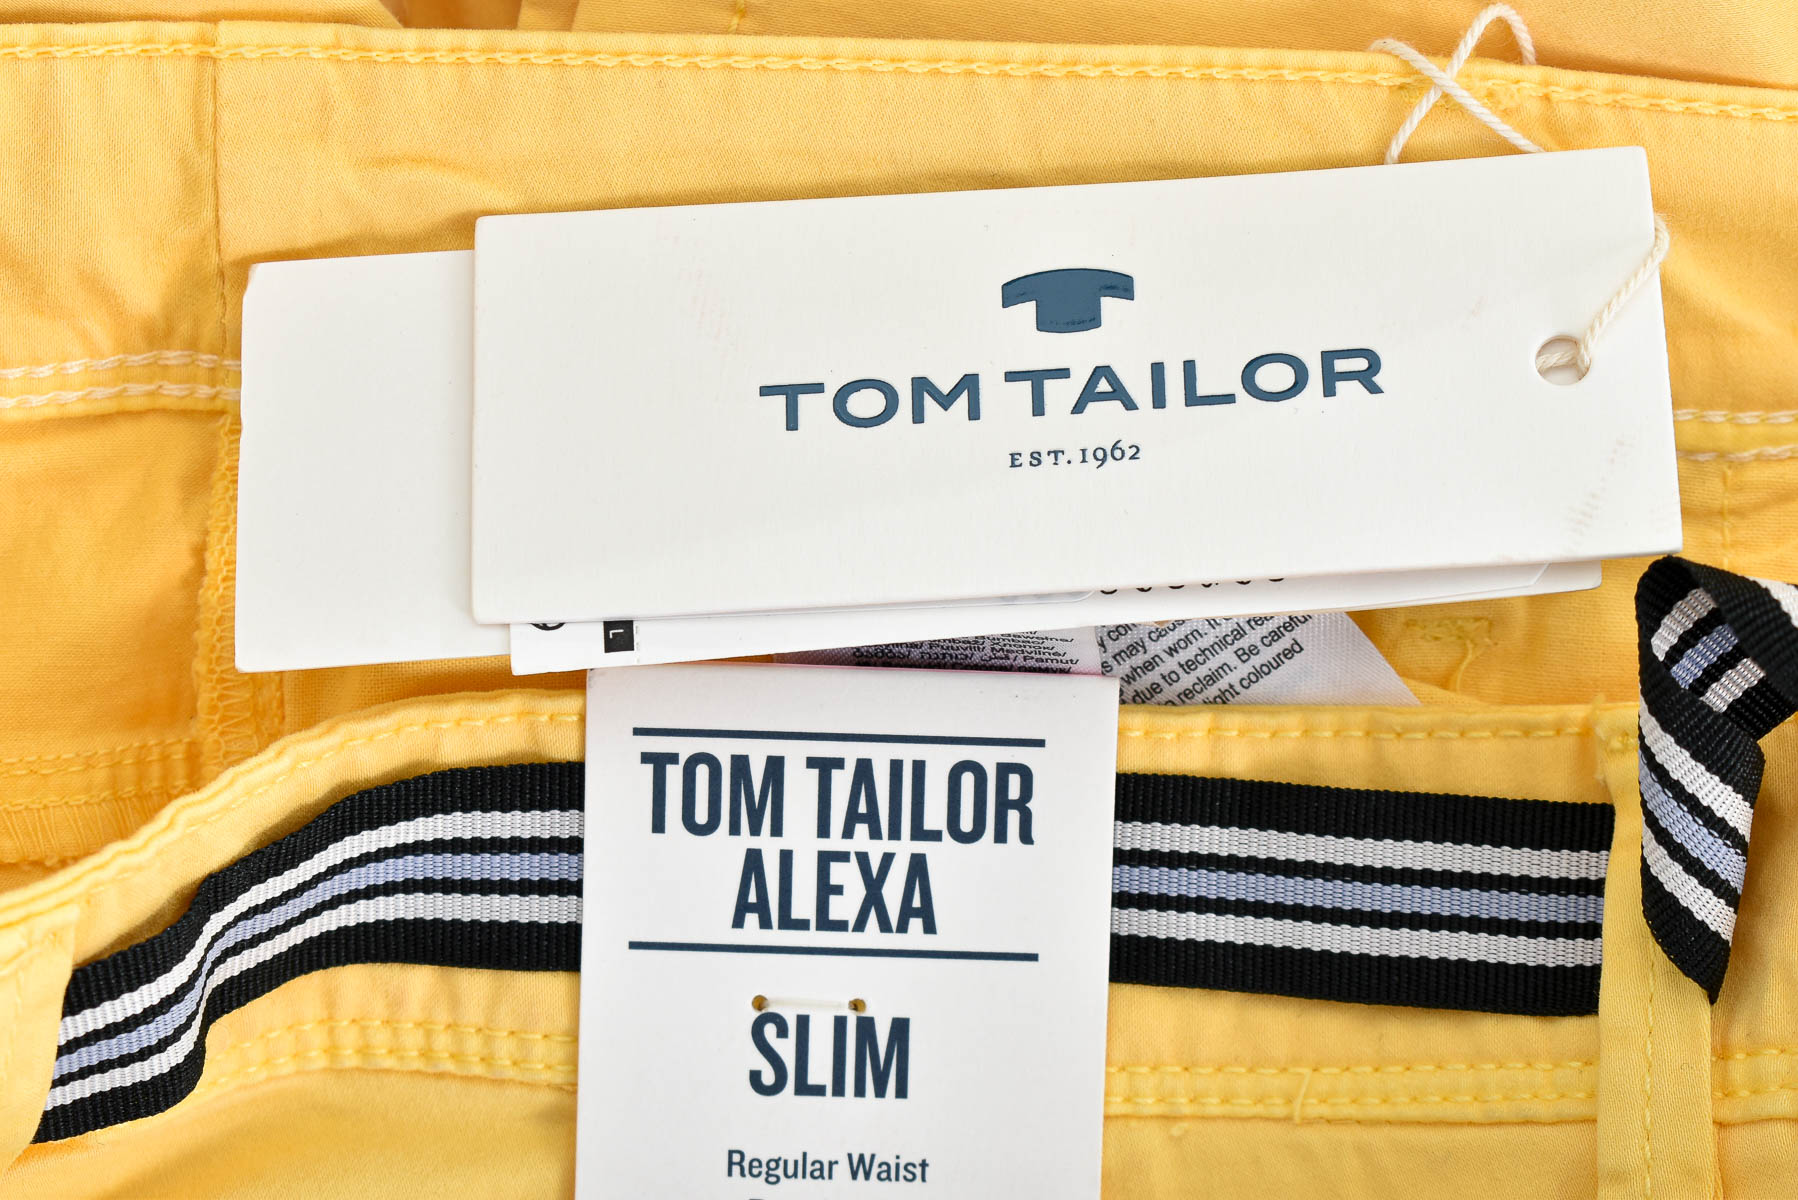 Female shorts - TOM TAILOR ALEXA - 2